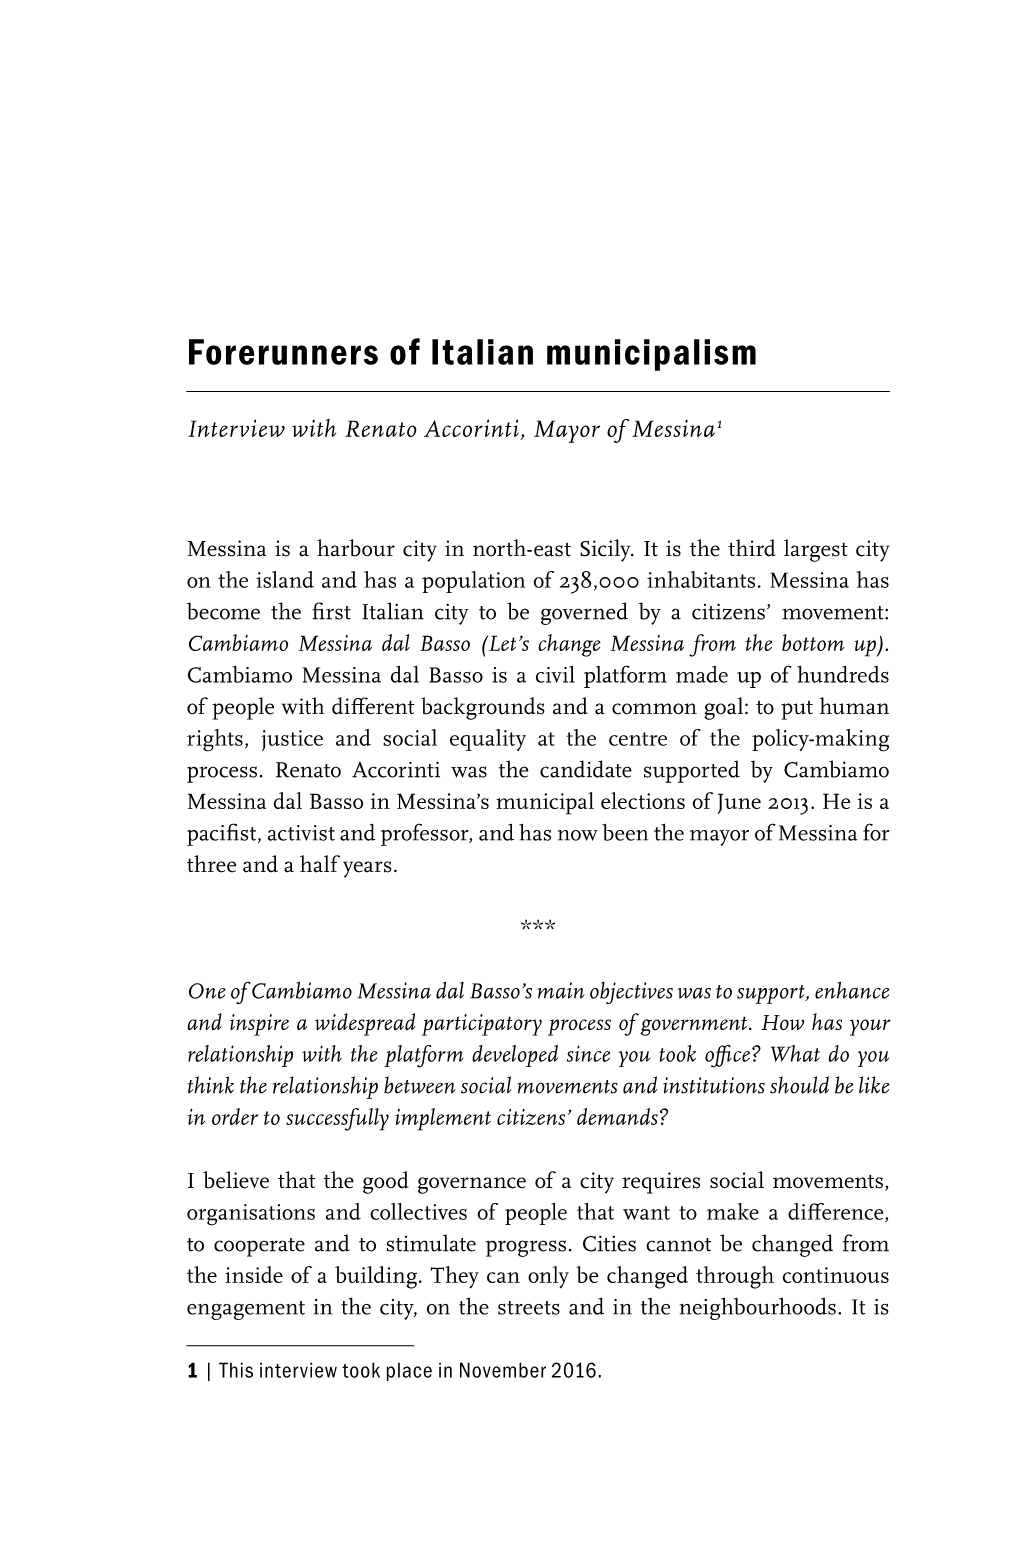 Forerunners of Italian Municipalism